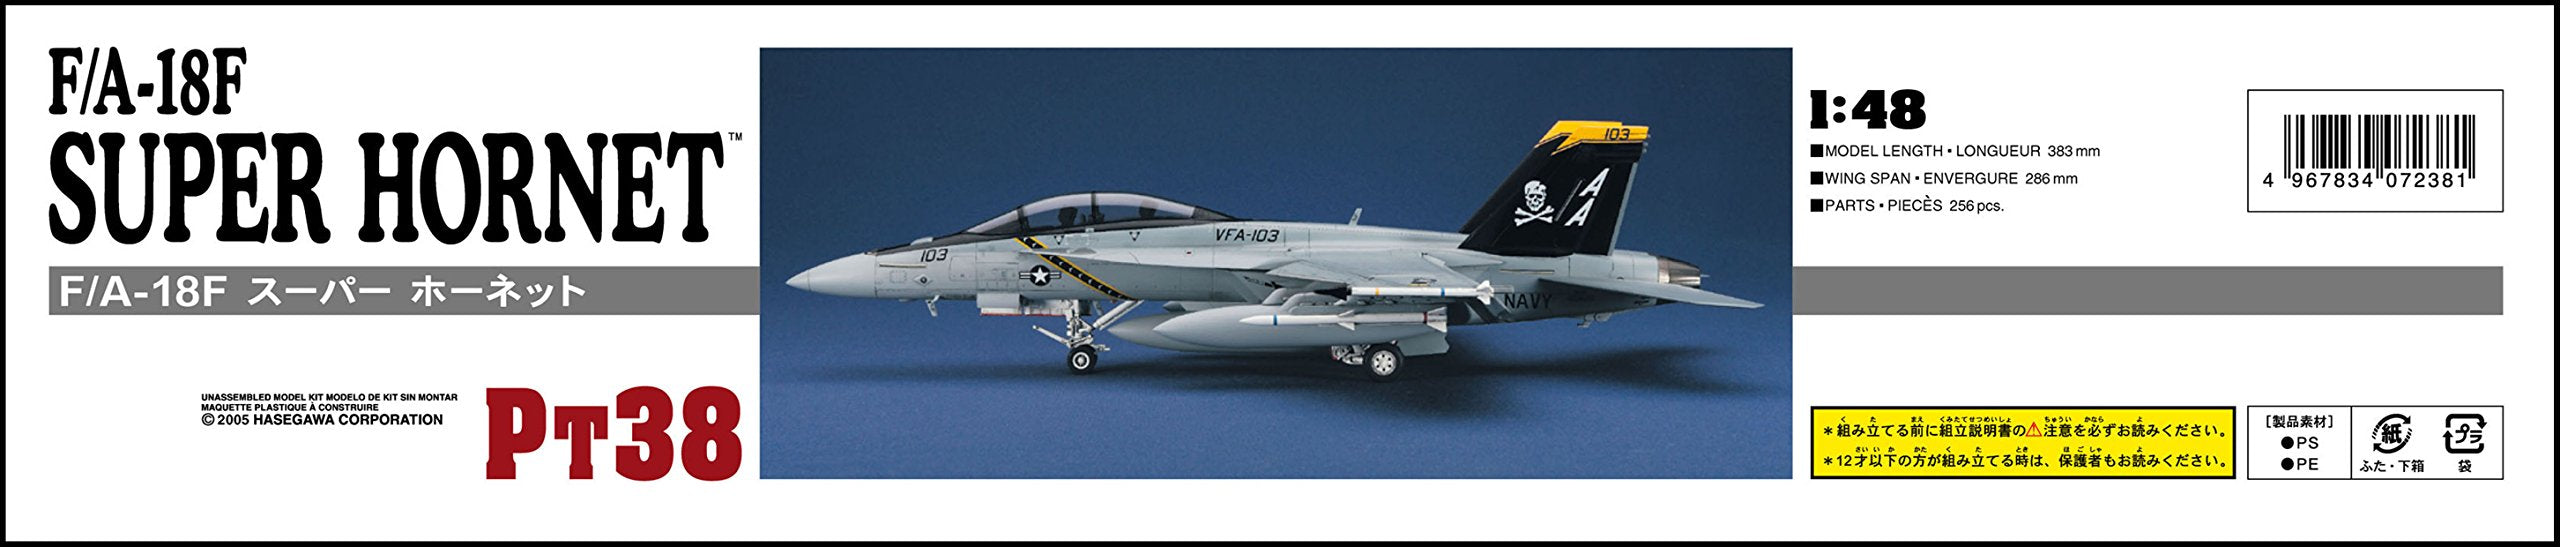 HASEGAWA 1/48 F/A-18F Super Hornet U.S. Navy Carrier-Borne Fighter/Attacker Plastic Model